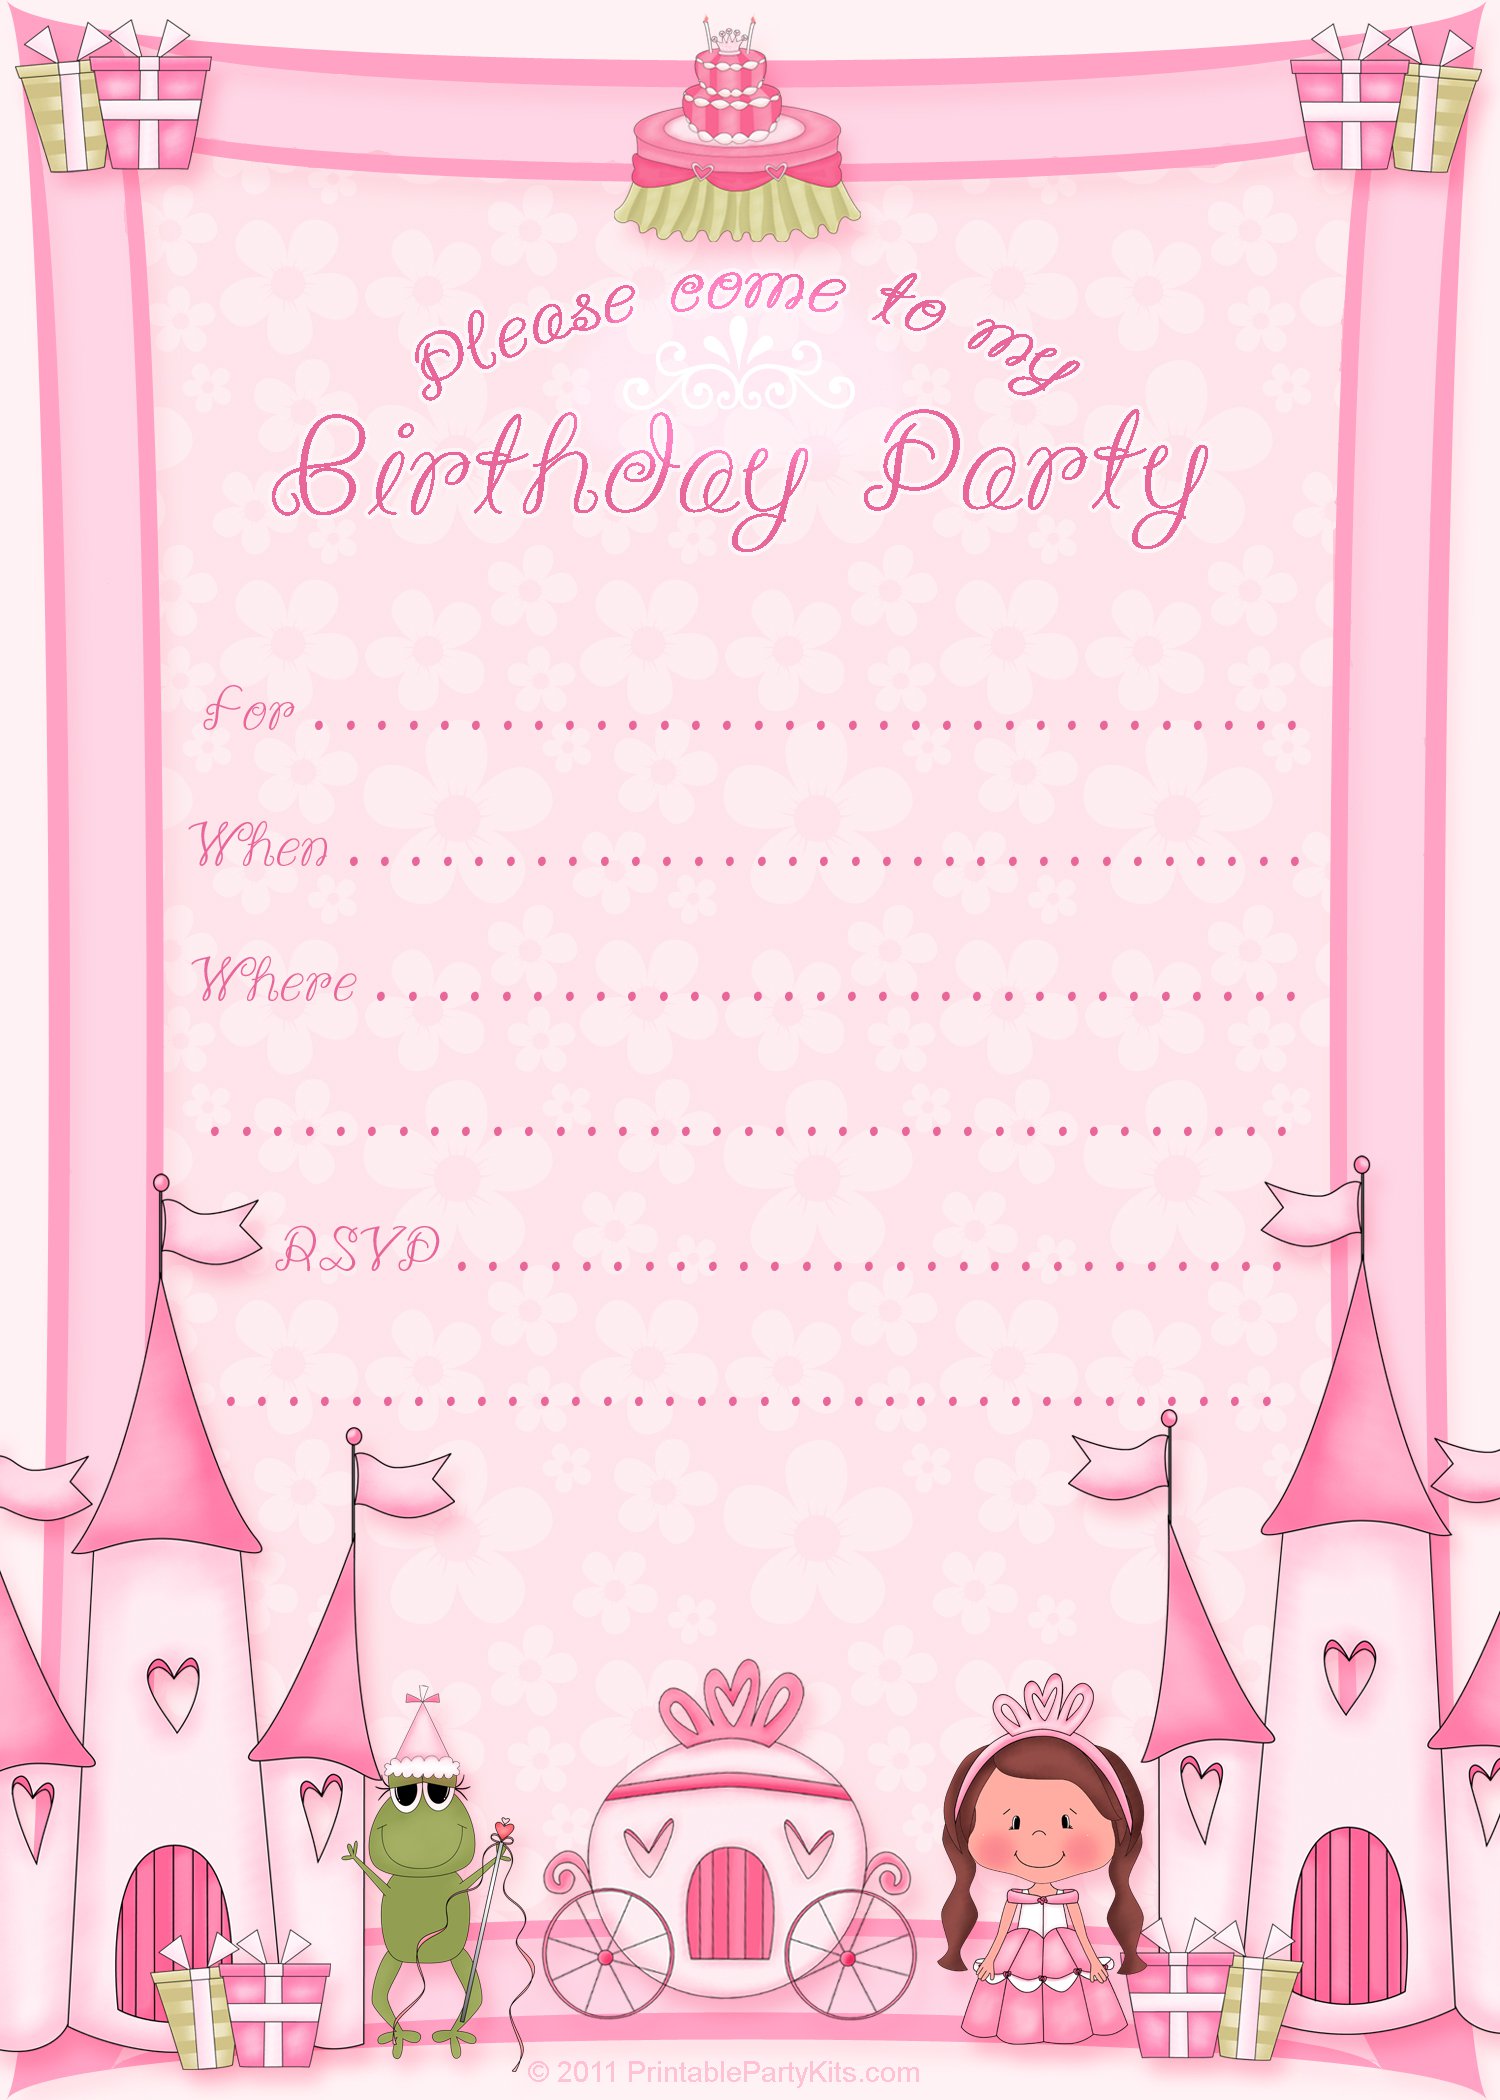 Boys Birthday Party Invitations Free Printable - Invitation Design Blog